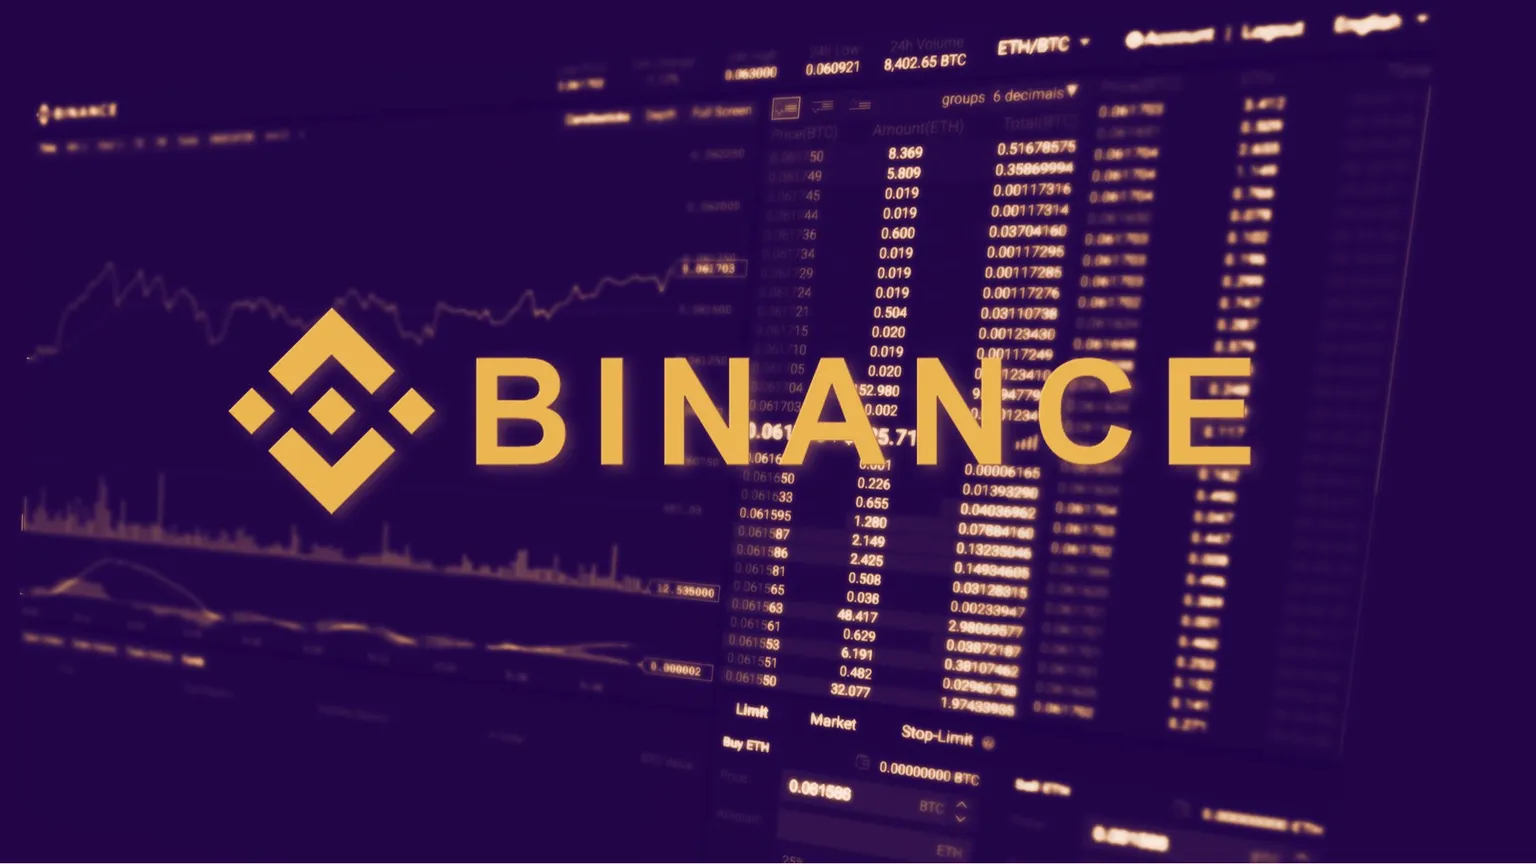 Logo de Binance en pantalla de trading. Imagen: Shutterstock 